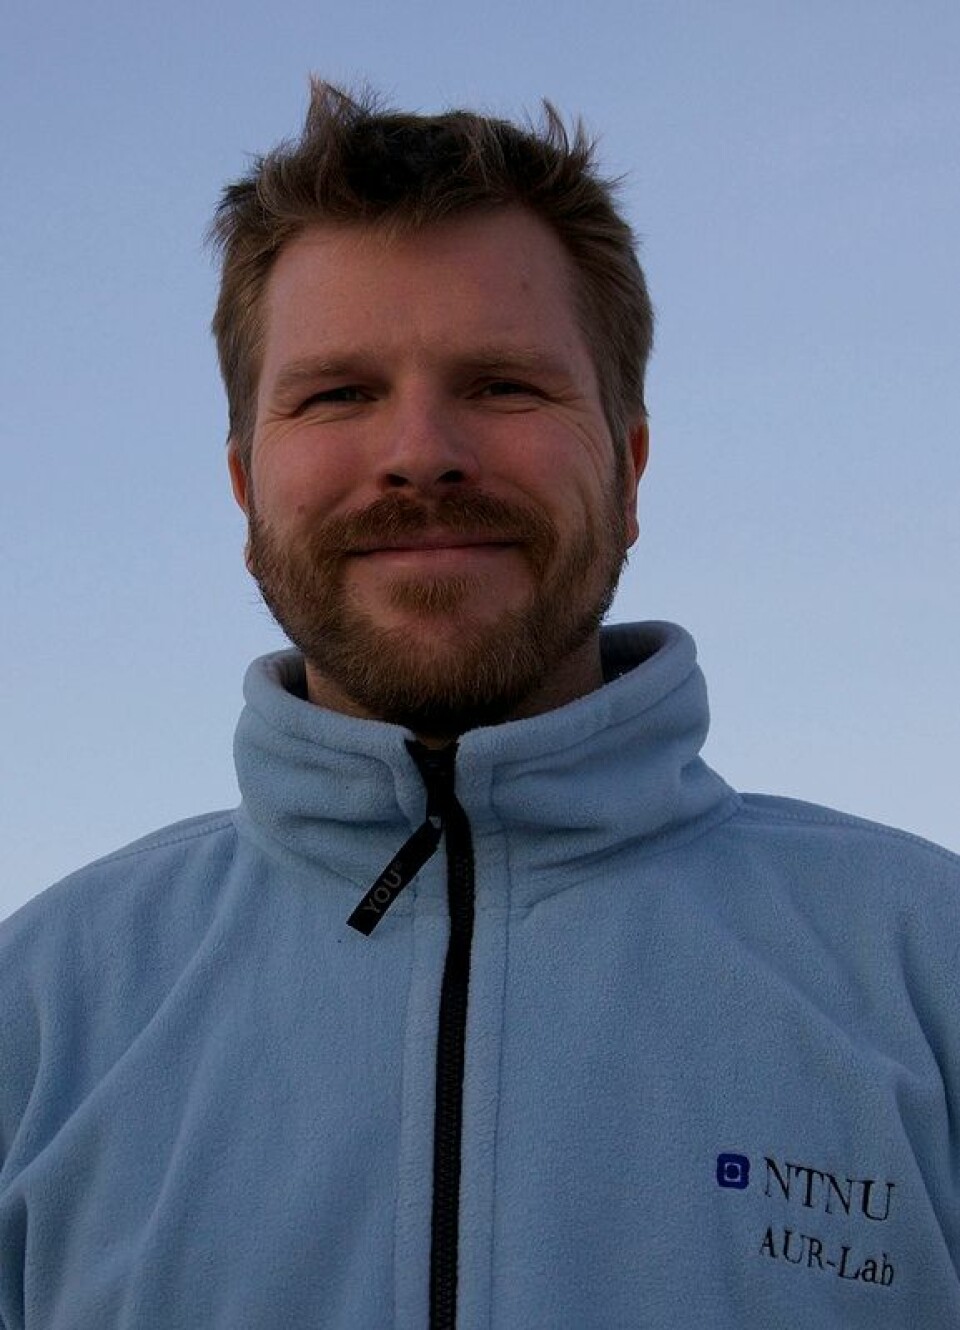 Øyvind Ødegård er marinarkeolog ved Vitenmuseet i Trondheim - og er tilknyttet AUR-lab, NTNUs senter for anvendt forskning på undervannsrobotikk. (Foto: Geir Johnsen / NTNU)